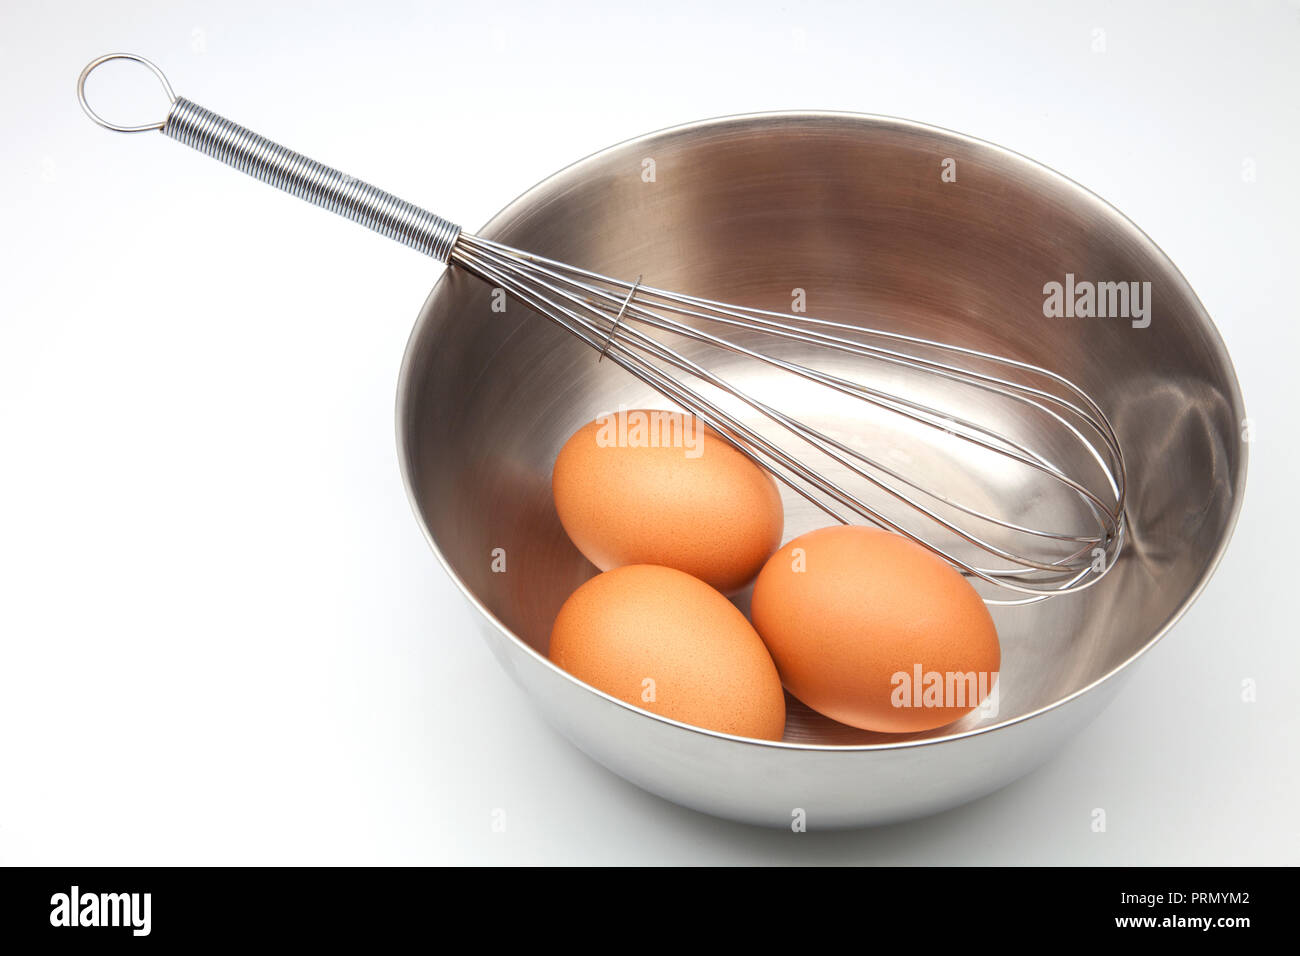 https://c8.alamy.com/comp/PRMYM2/cooking-utensils-for-beating-eggs-PRMYM2.jpg